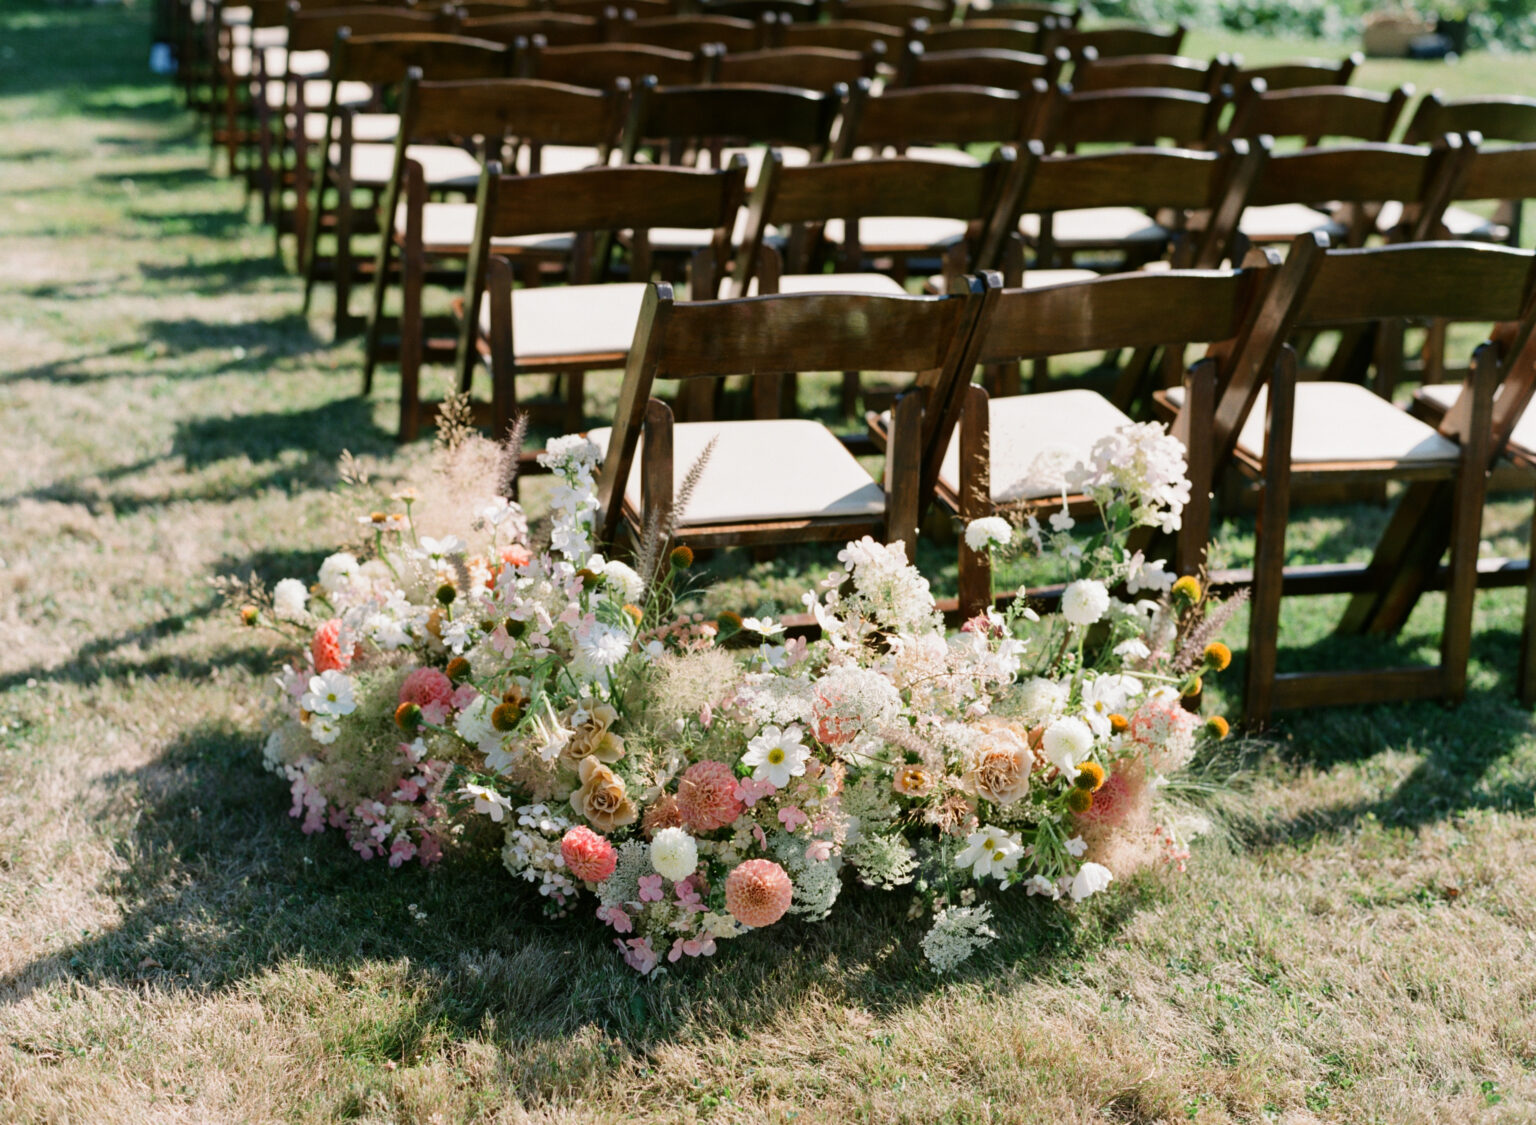 Aisle Flowers for a Summer Wedding designed by Seattle wedding florist Noctua Florals